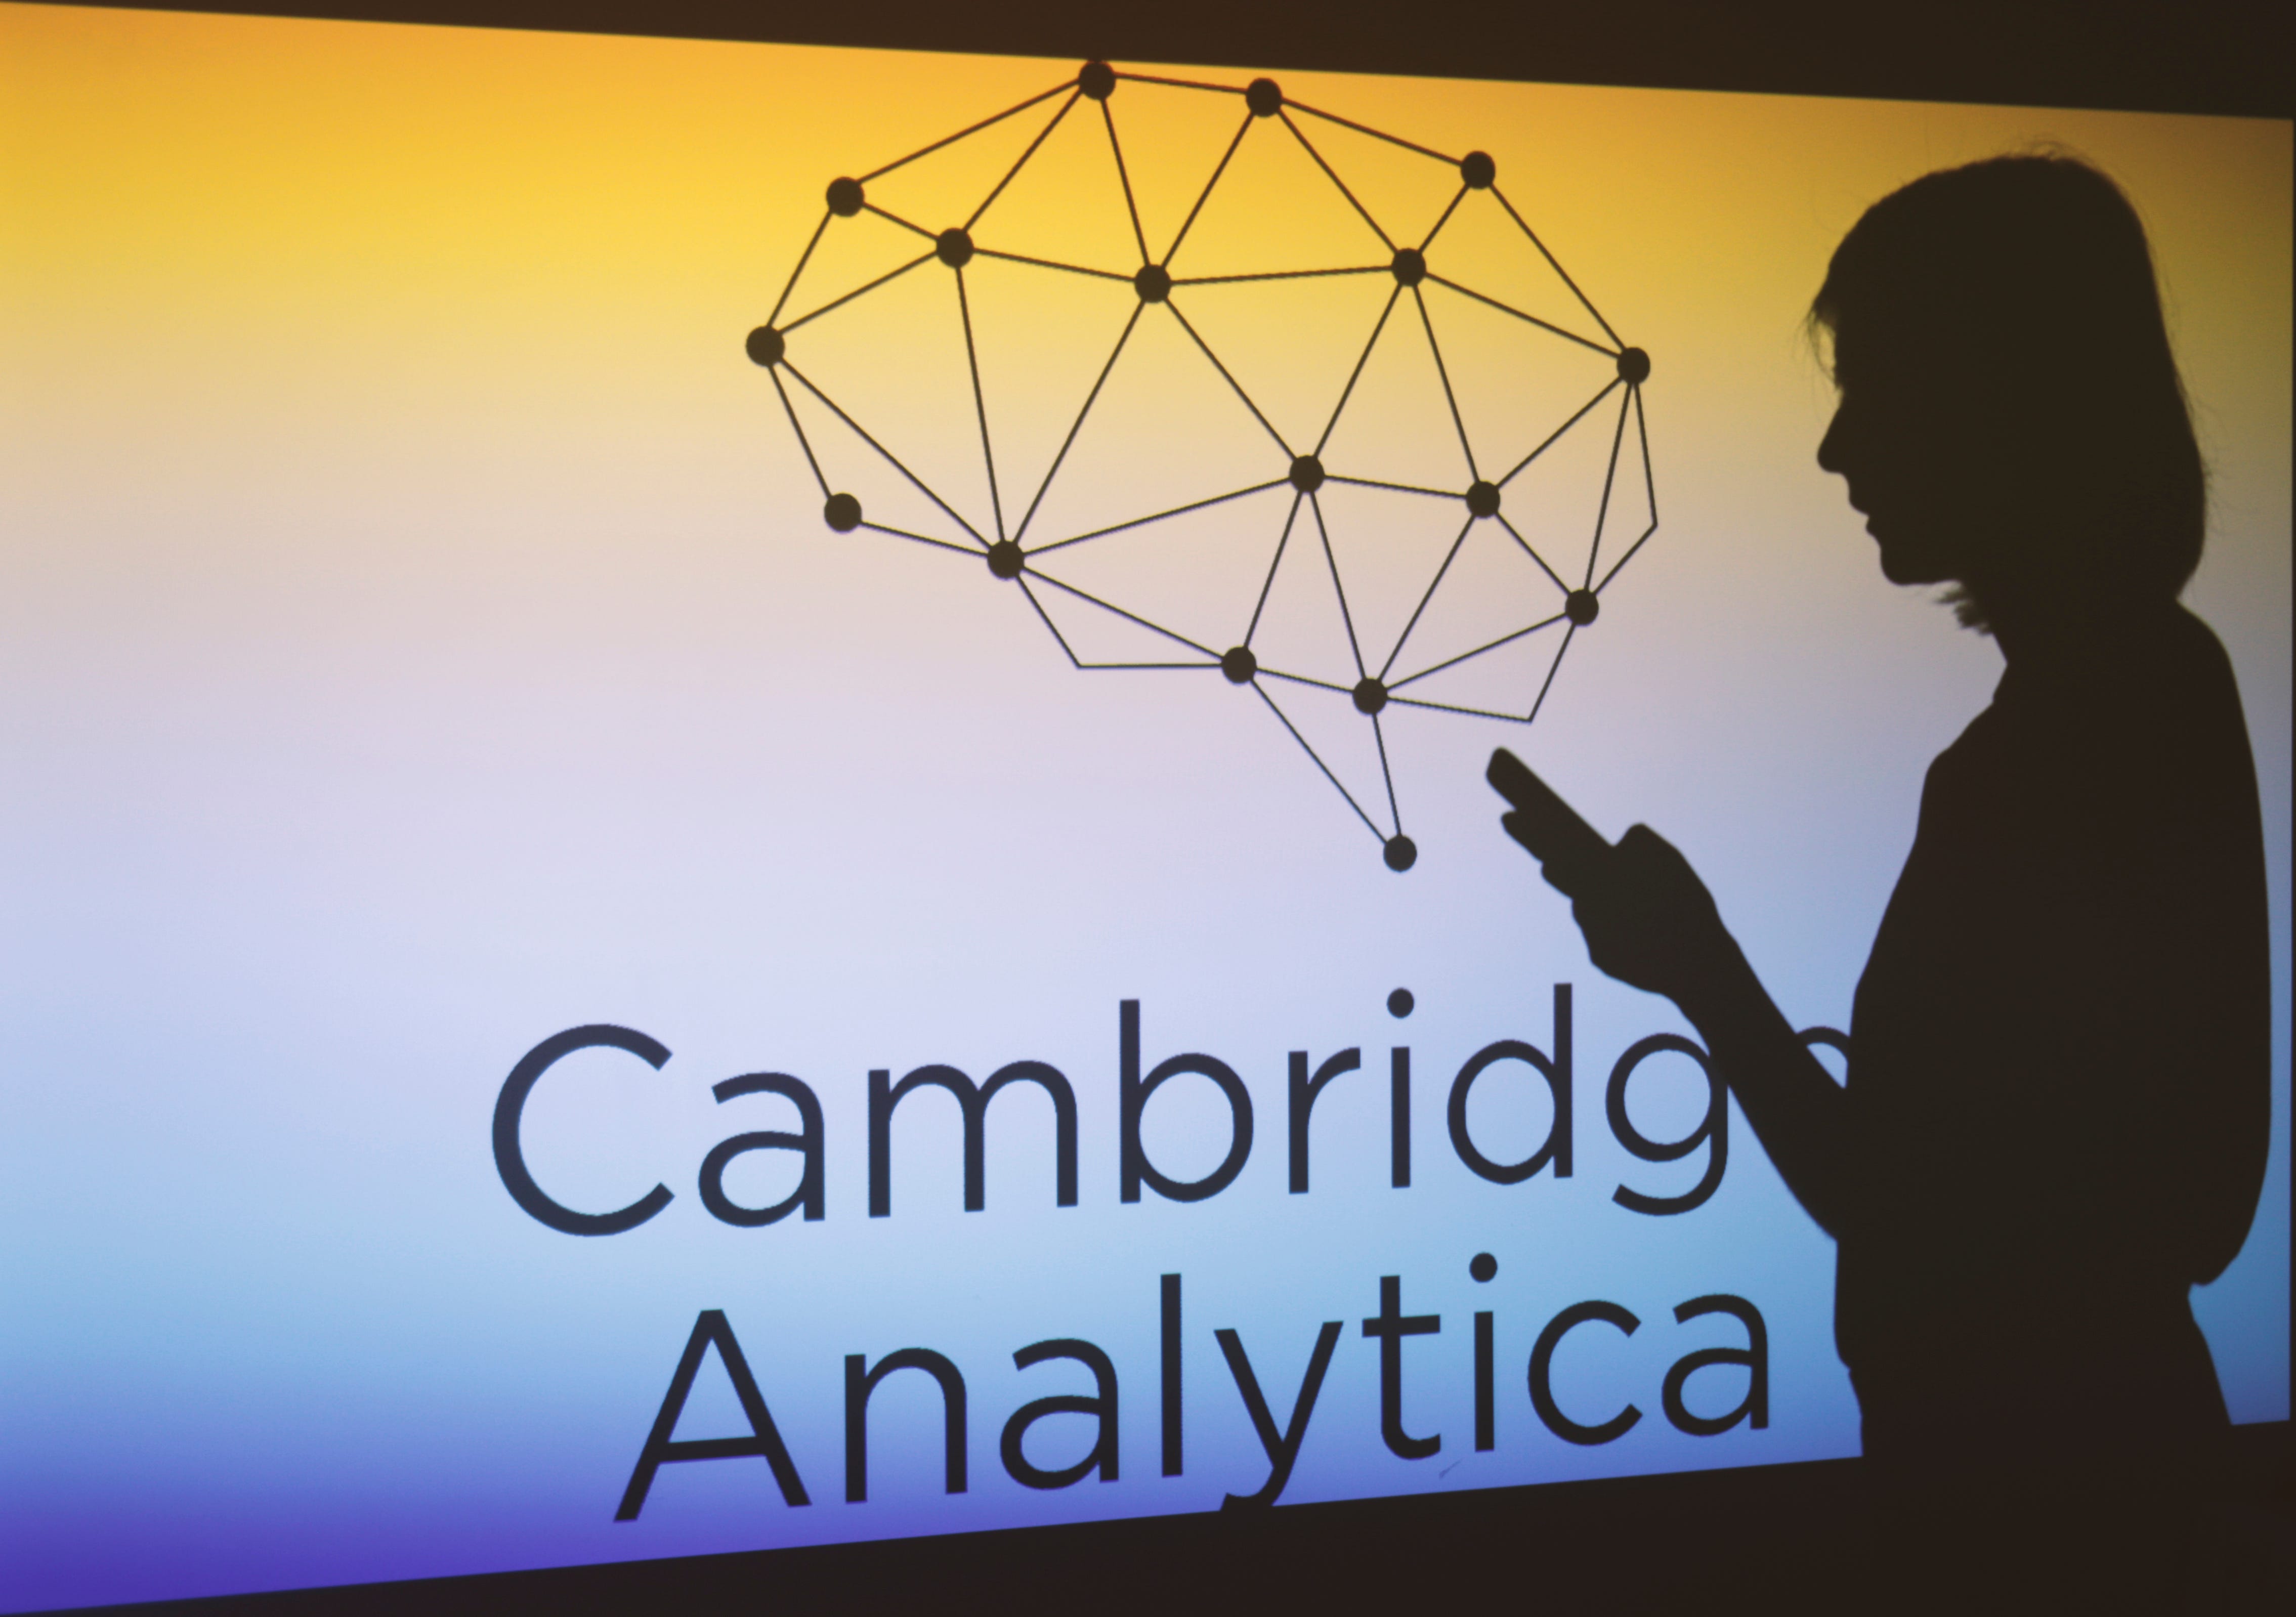 Facebook Login: After Cambridge Analytica data leak, think twice